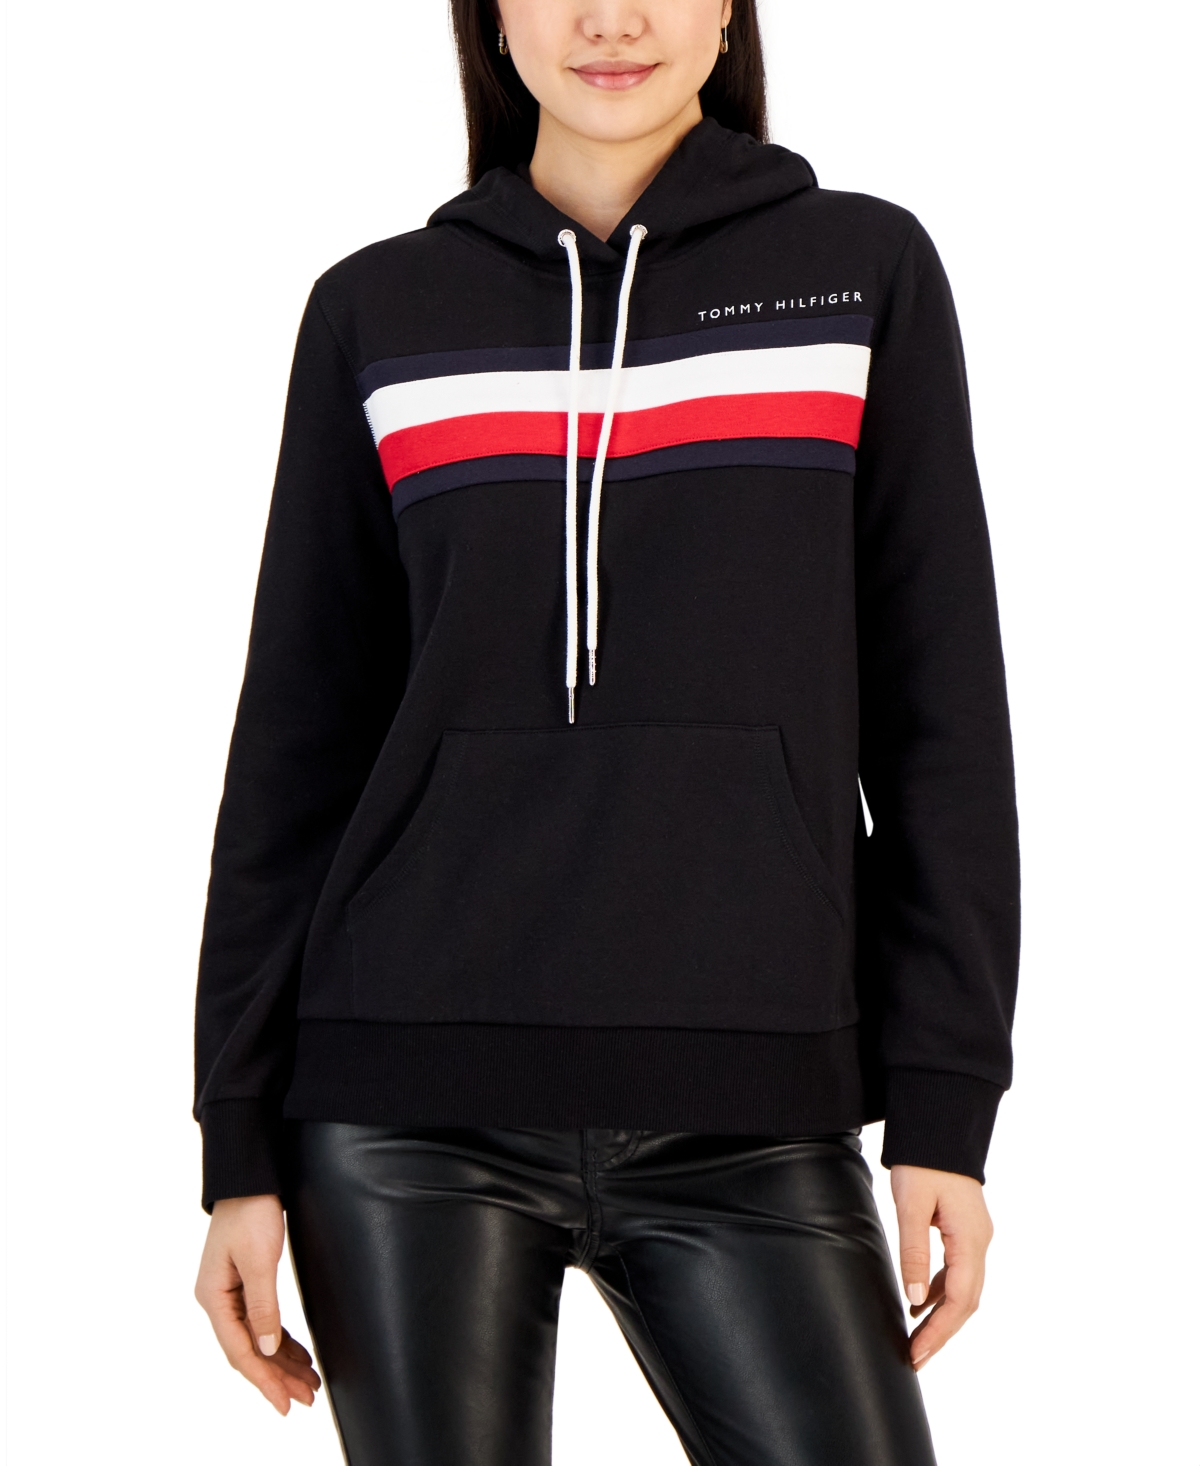 Tommy Hilfiger Women's Front Pocket Logo Pullover Hooded Sweatshirt